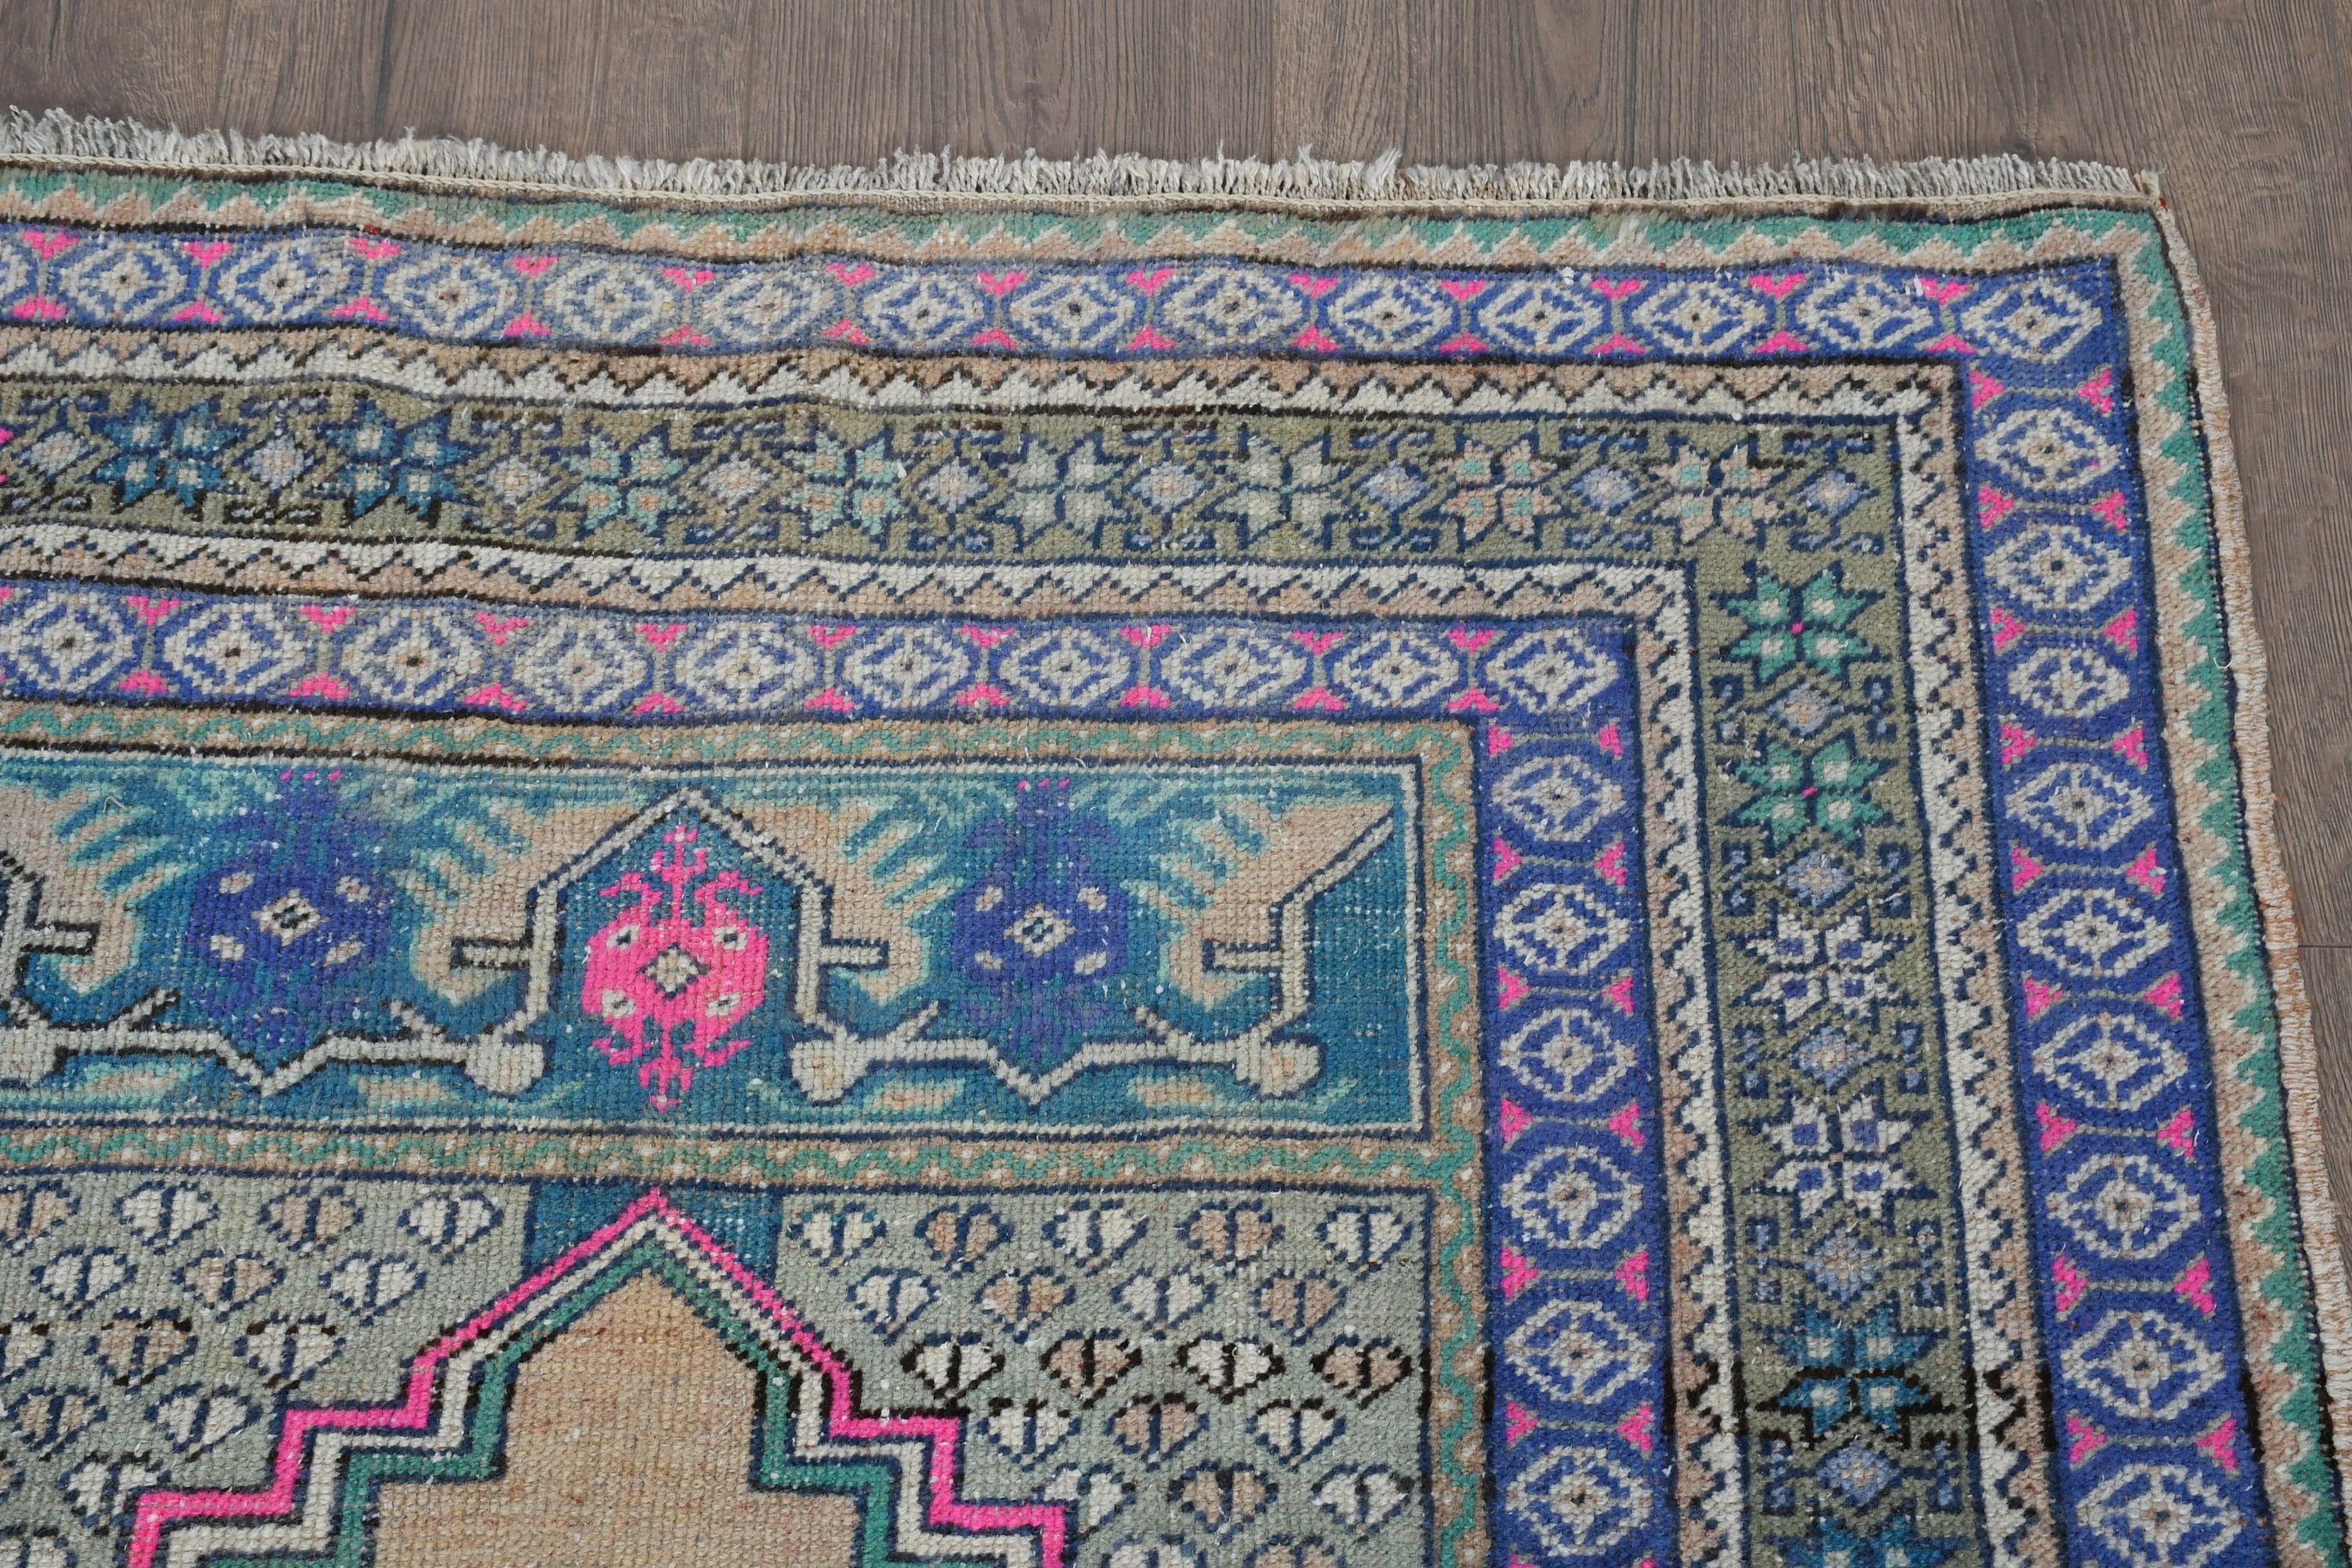 Anatolian Rug, Turkish Rug, Rugs for Bedroom, Vintage Rugs, 3.4x5.4 ft Accent Rug, Entry Rugs, Bedroom Rugs, Blue Floor Rug